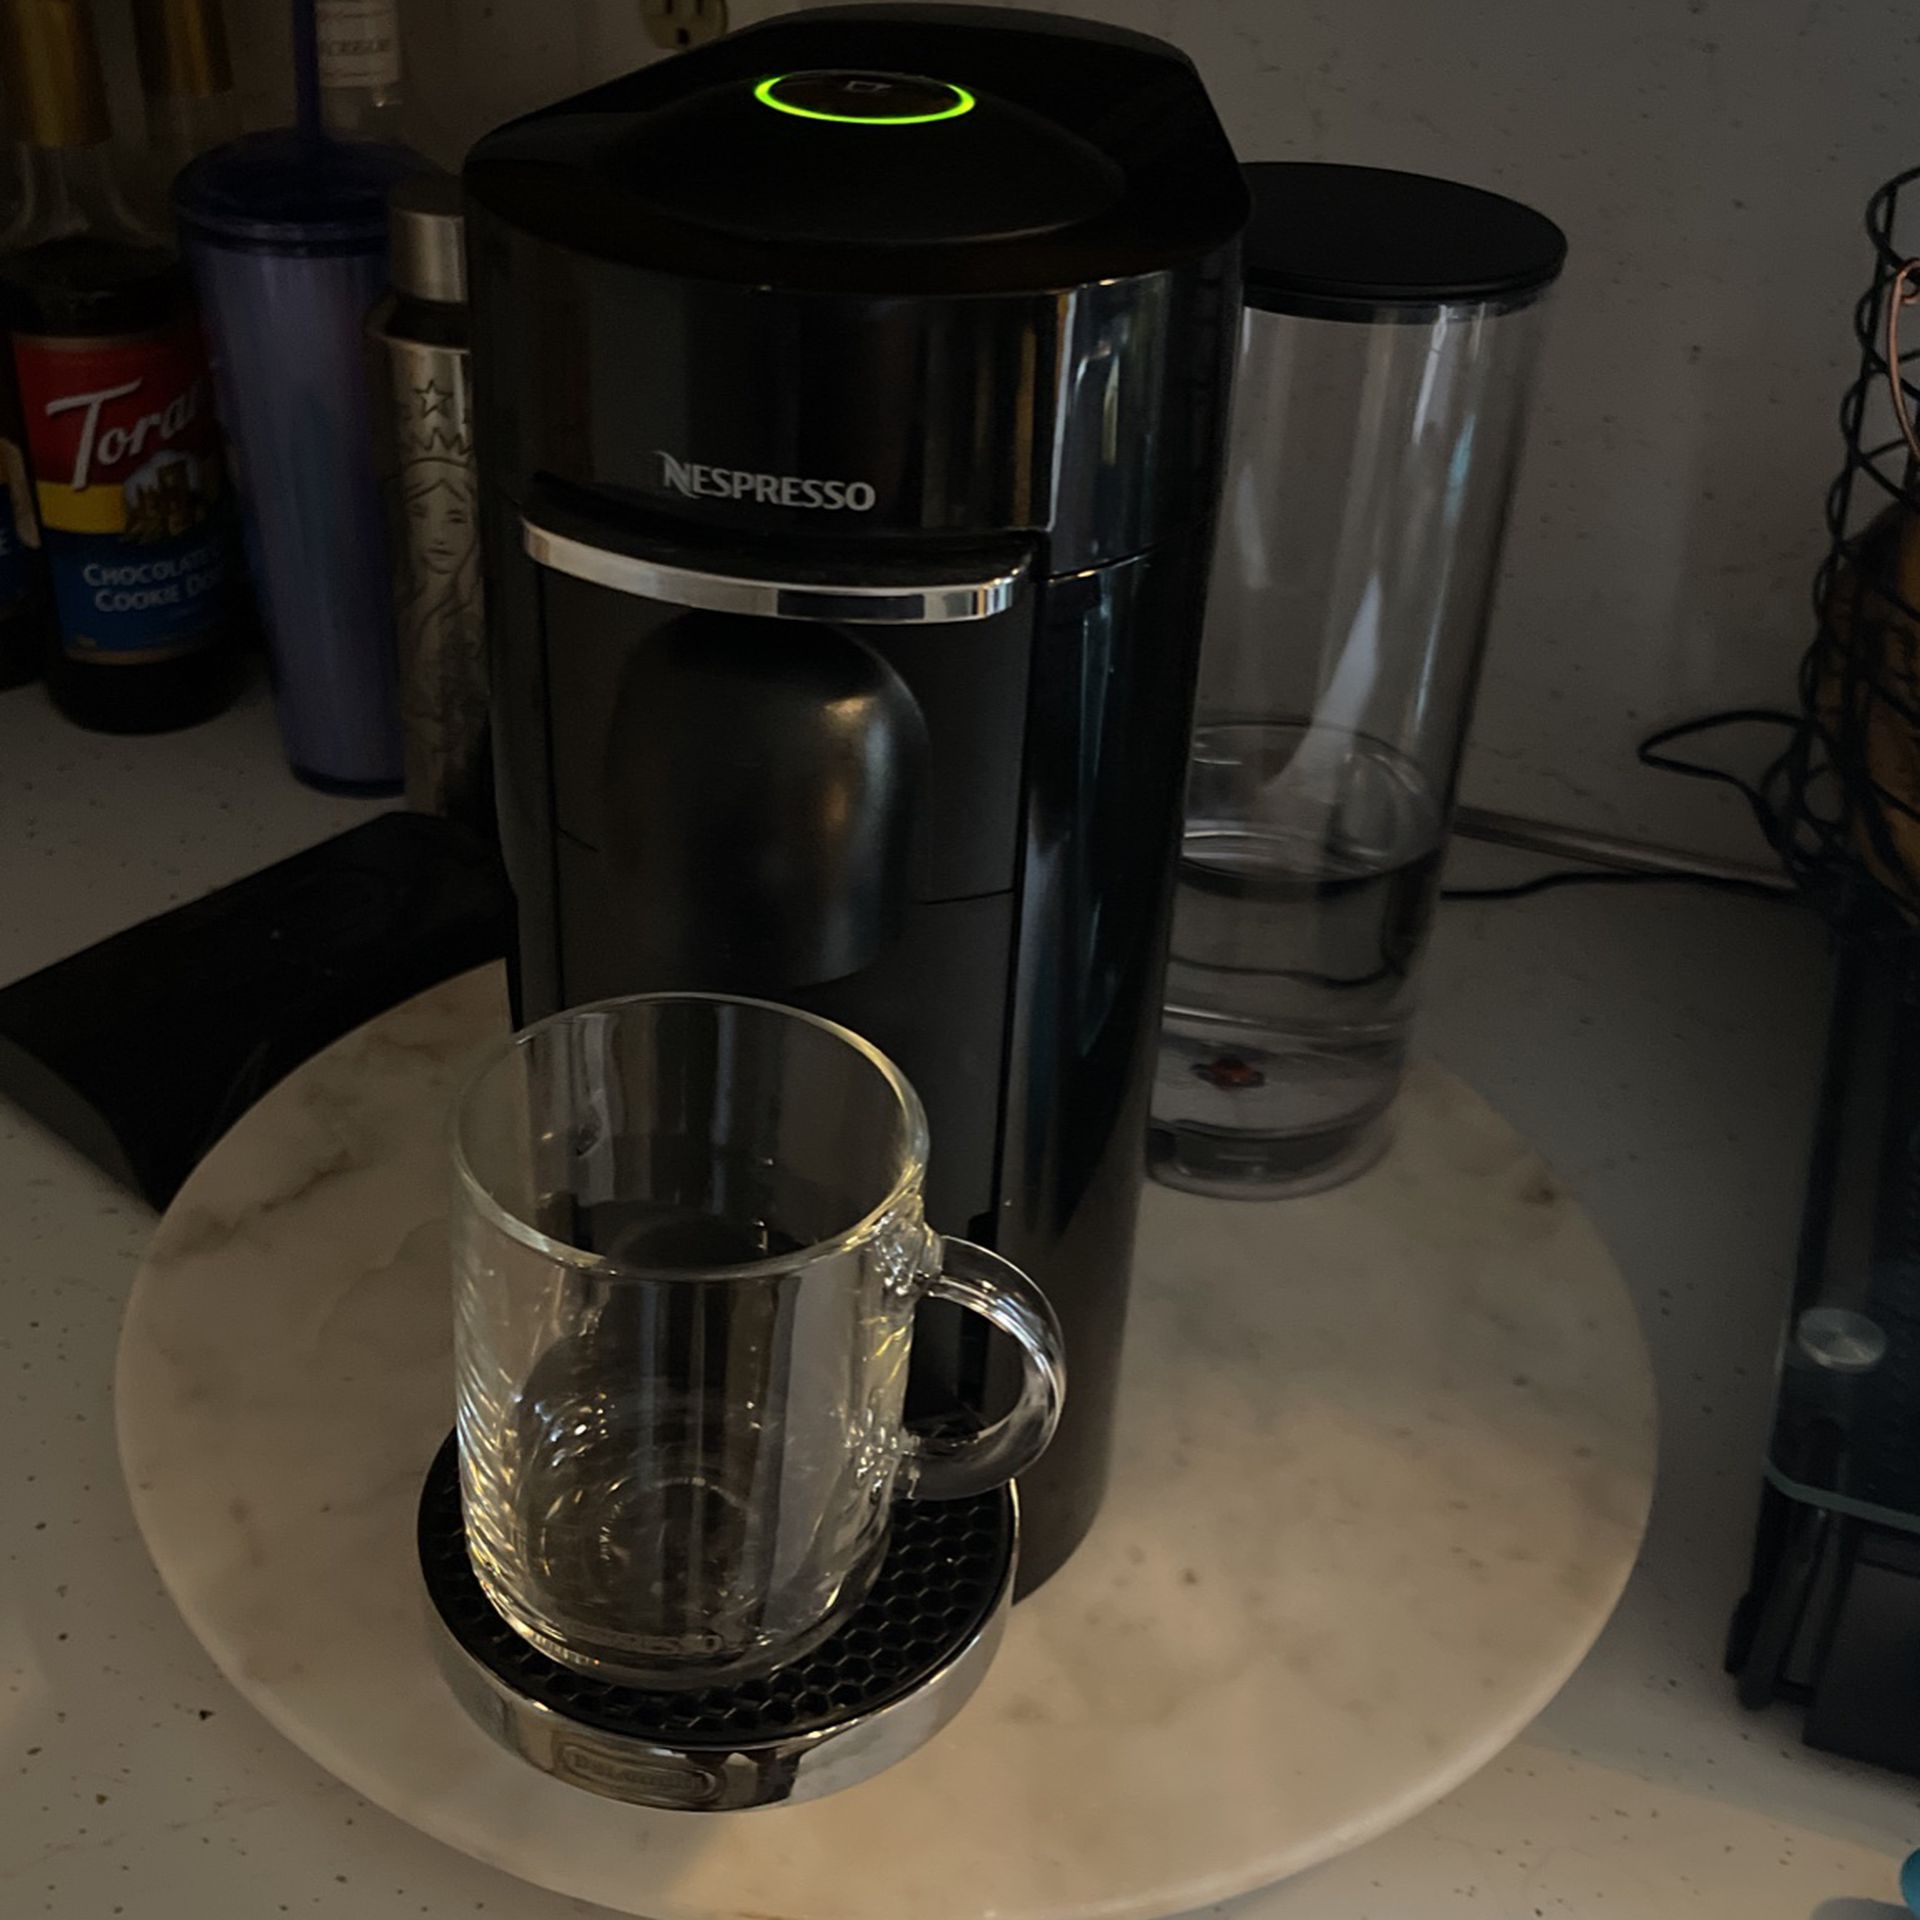 Nespresso Automatic Coffee Maker